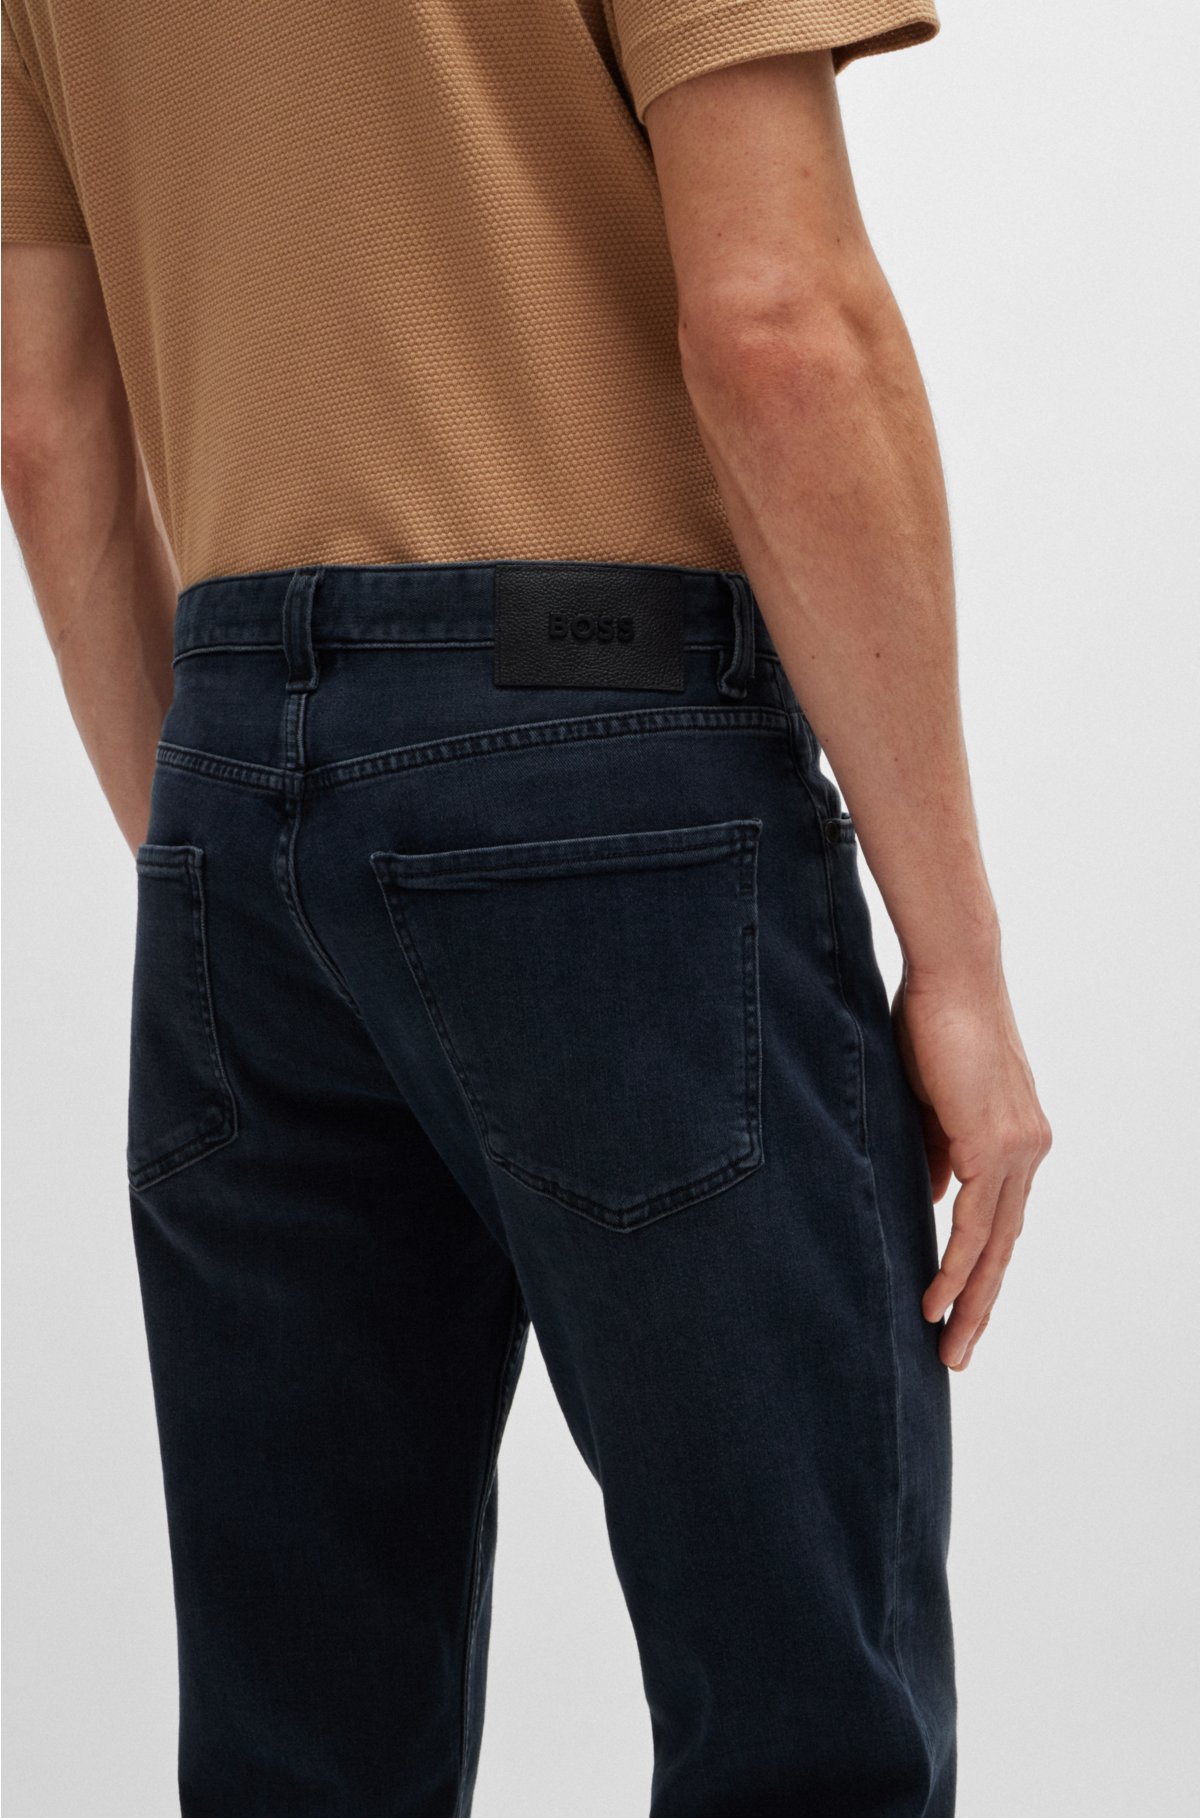 Maine Regular-fit jeans in coal-navy Italian denim, Dark Blue